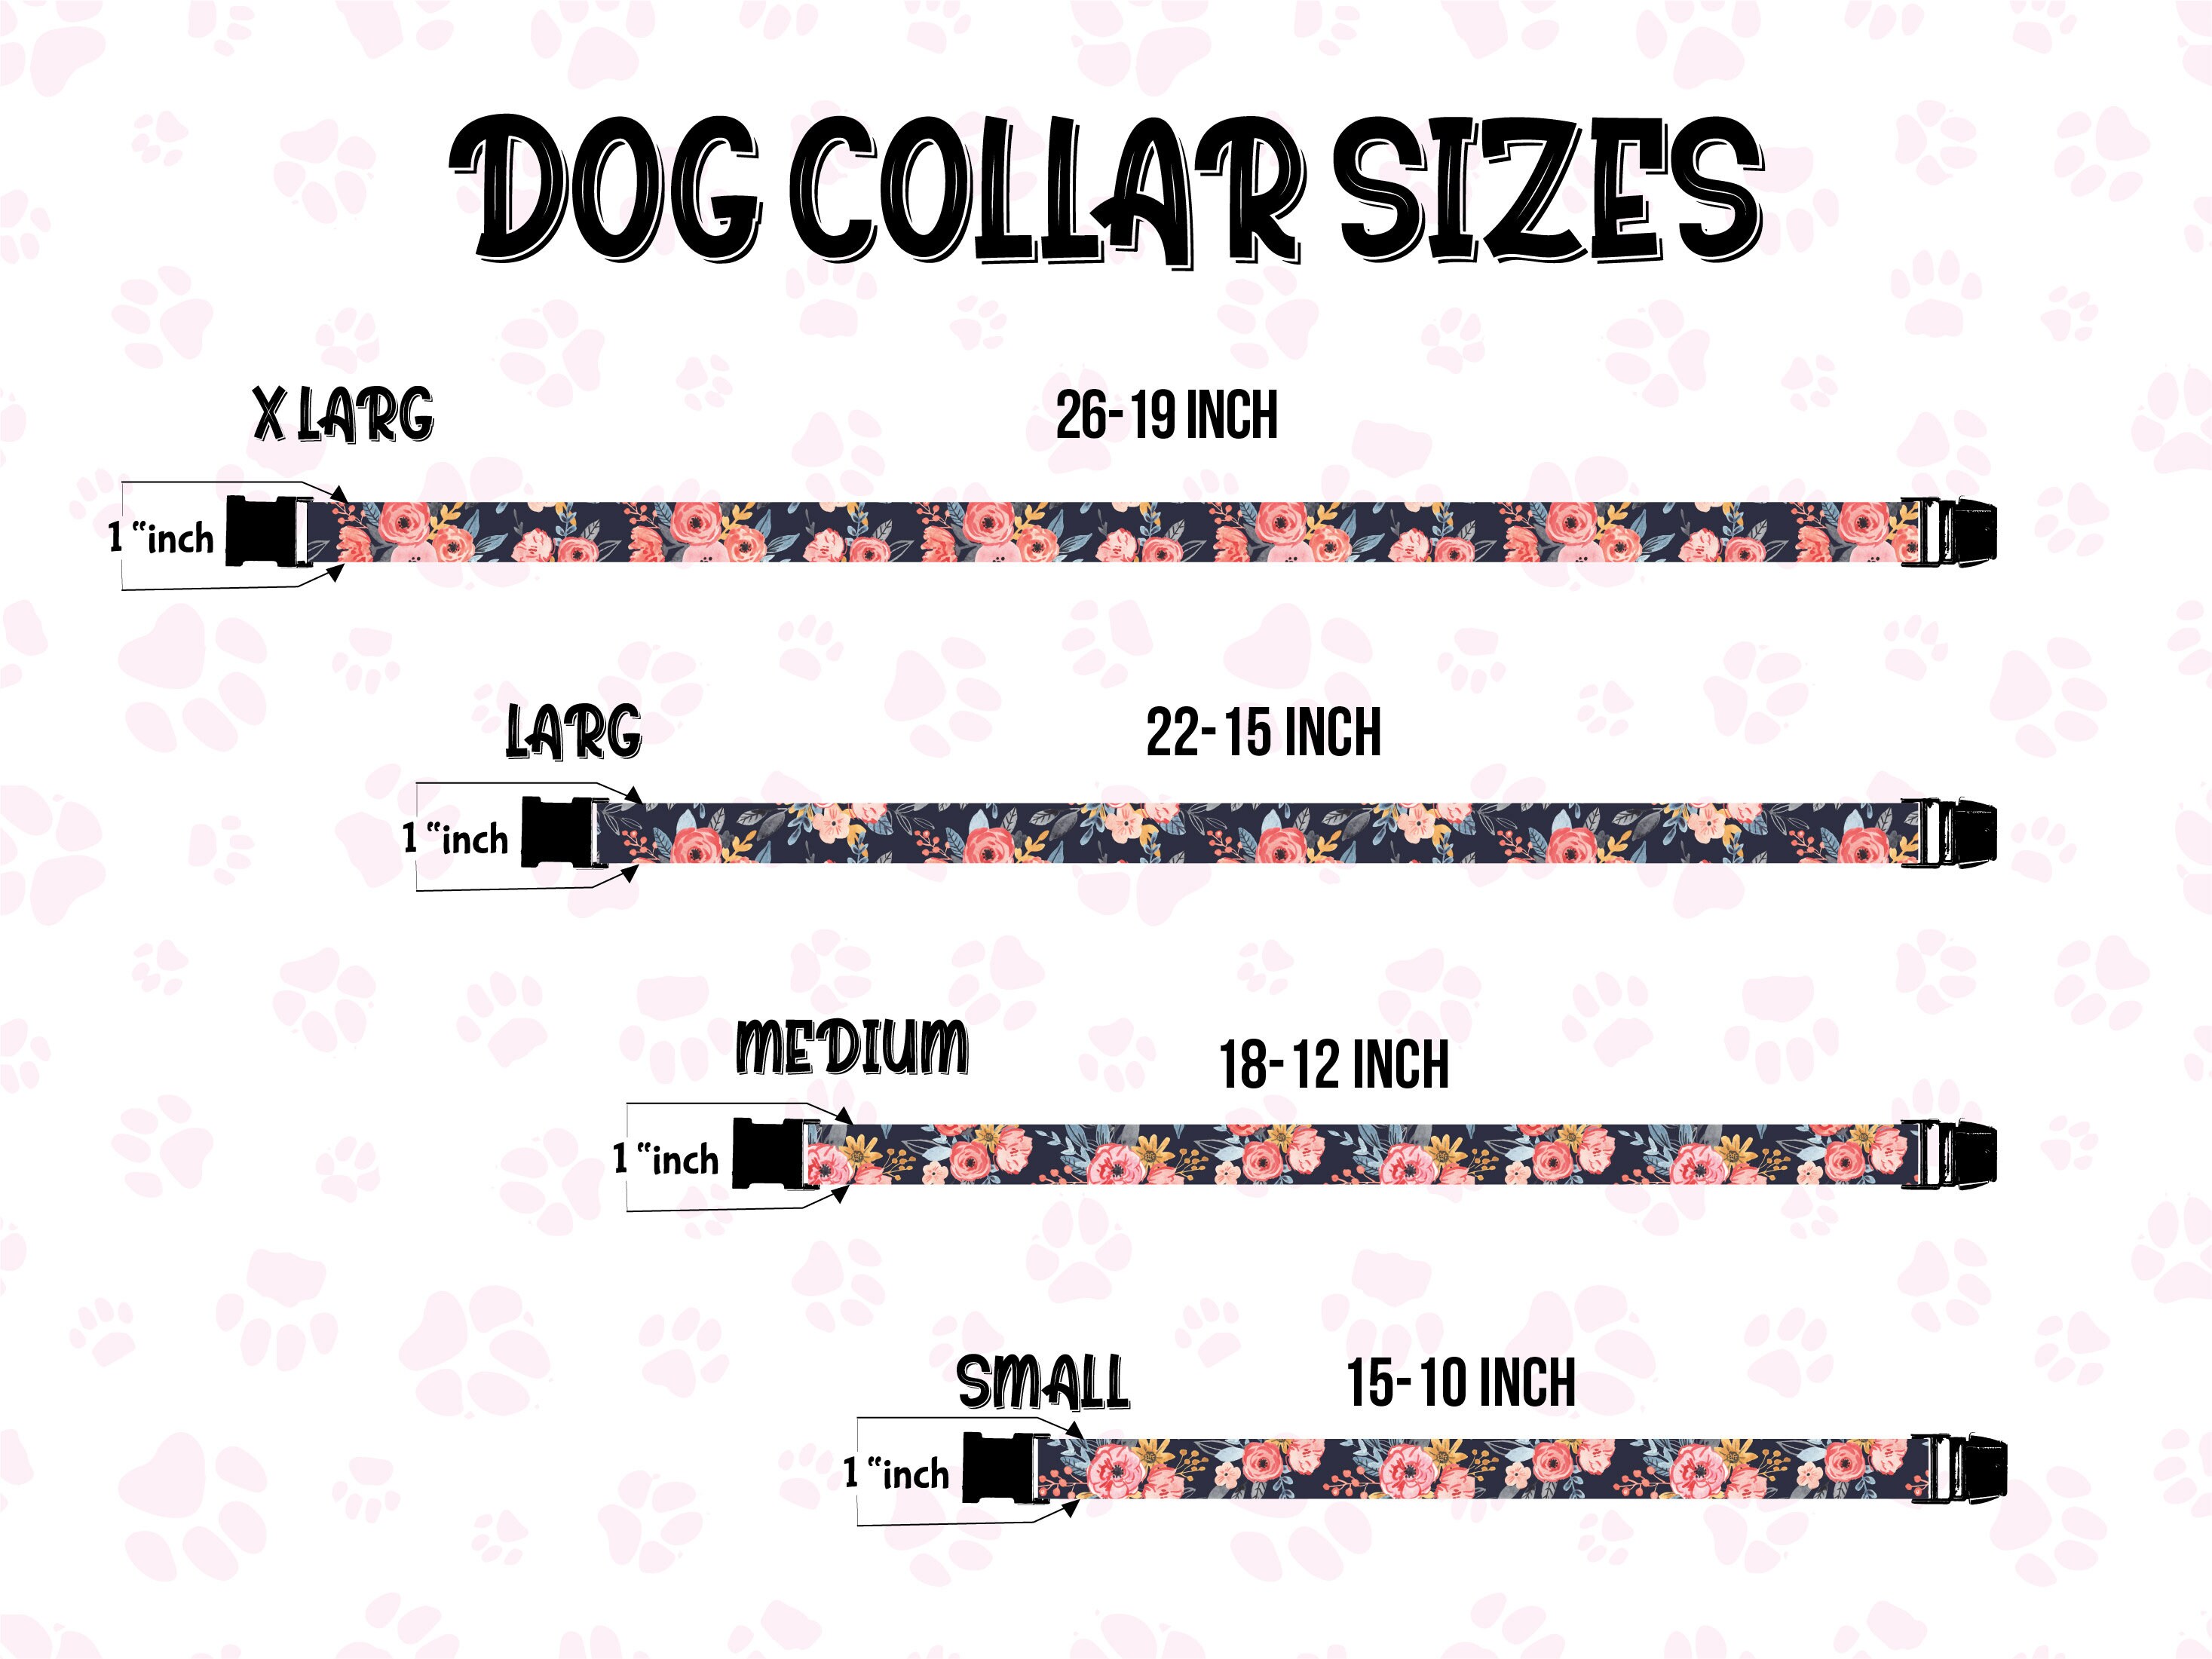 Handmade dog collars ❤️ in an elegant design